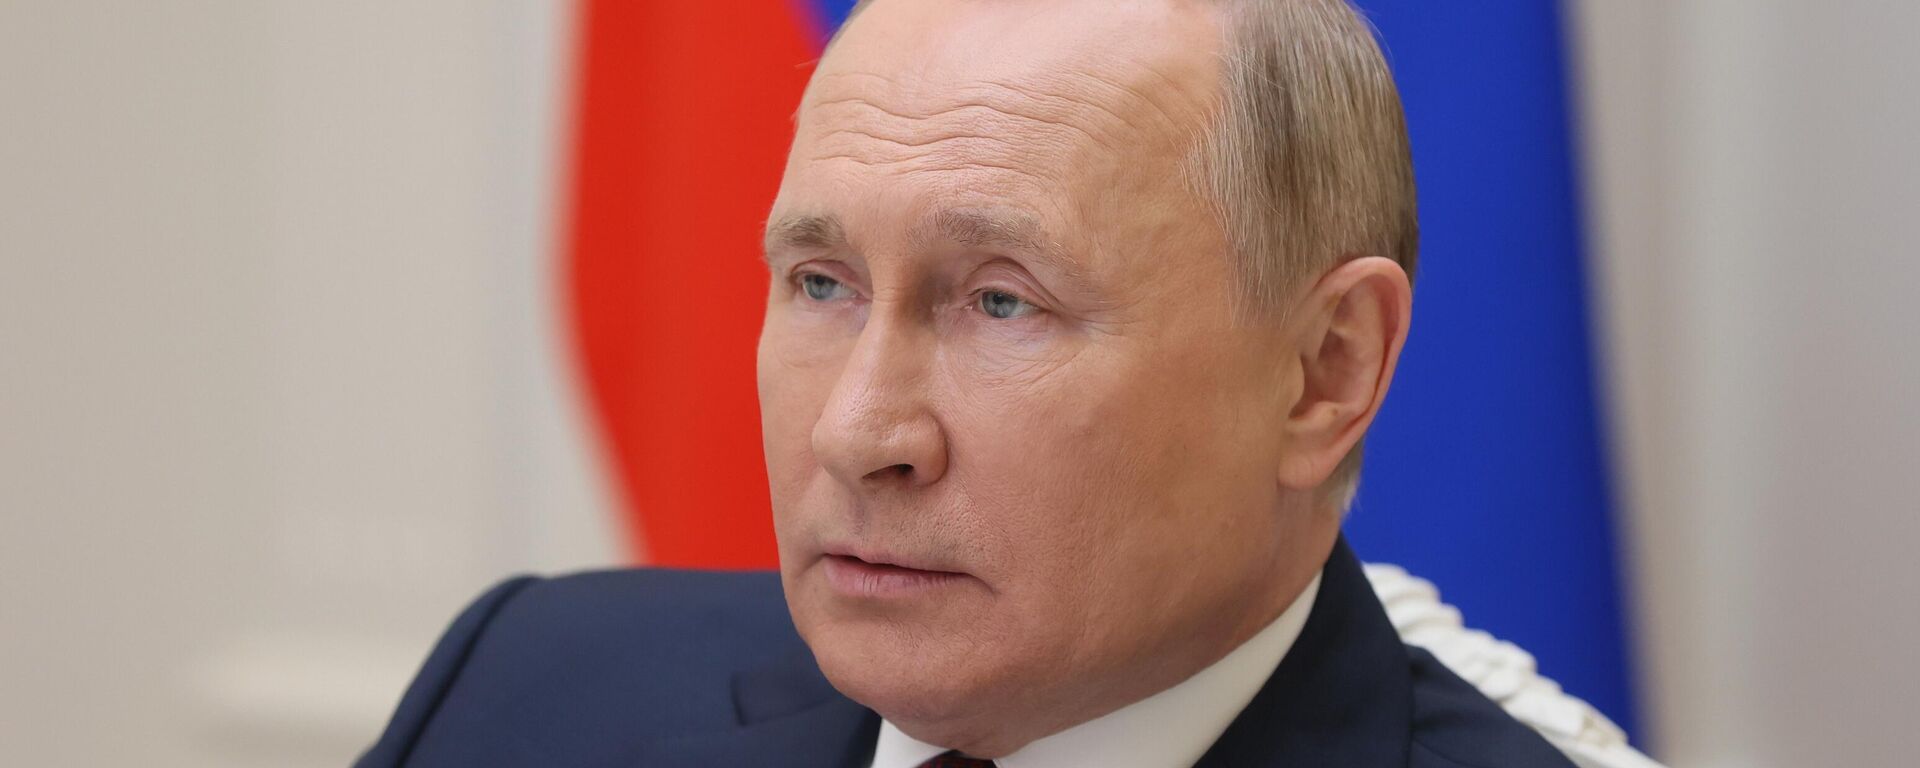 Vladímir Putin, presidente de Rusia - Sputnik Mundo, 1920, 14.12.2021